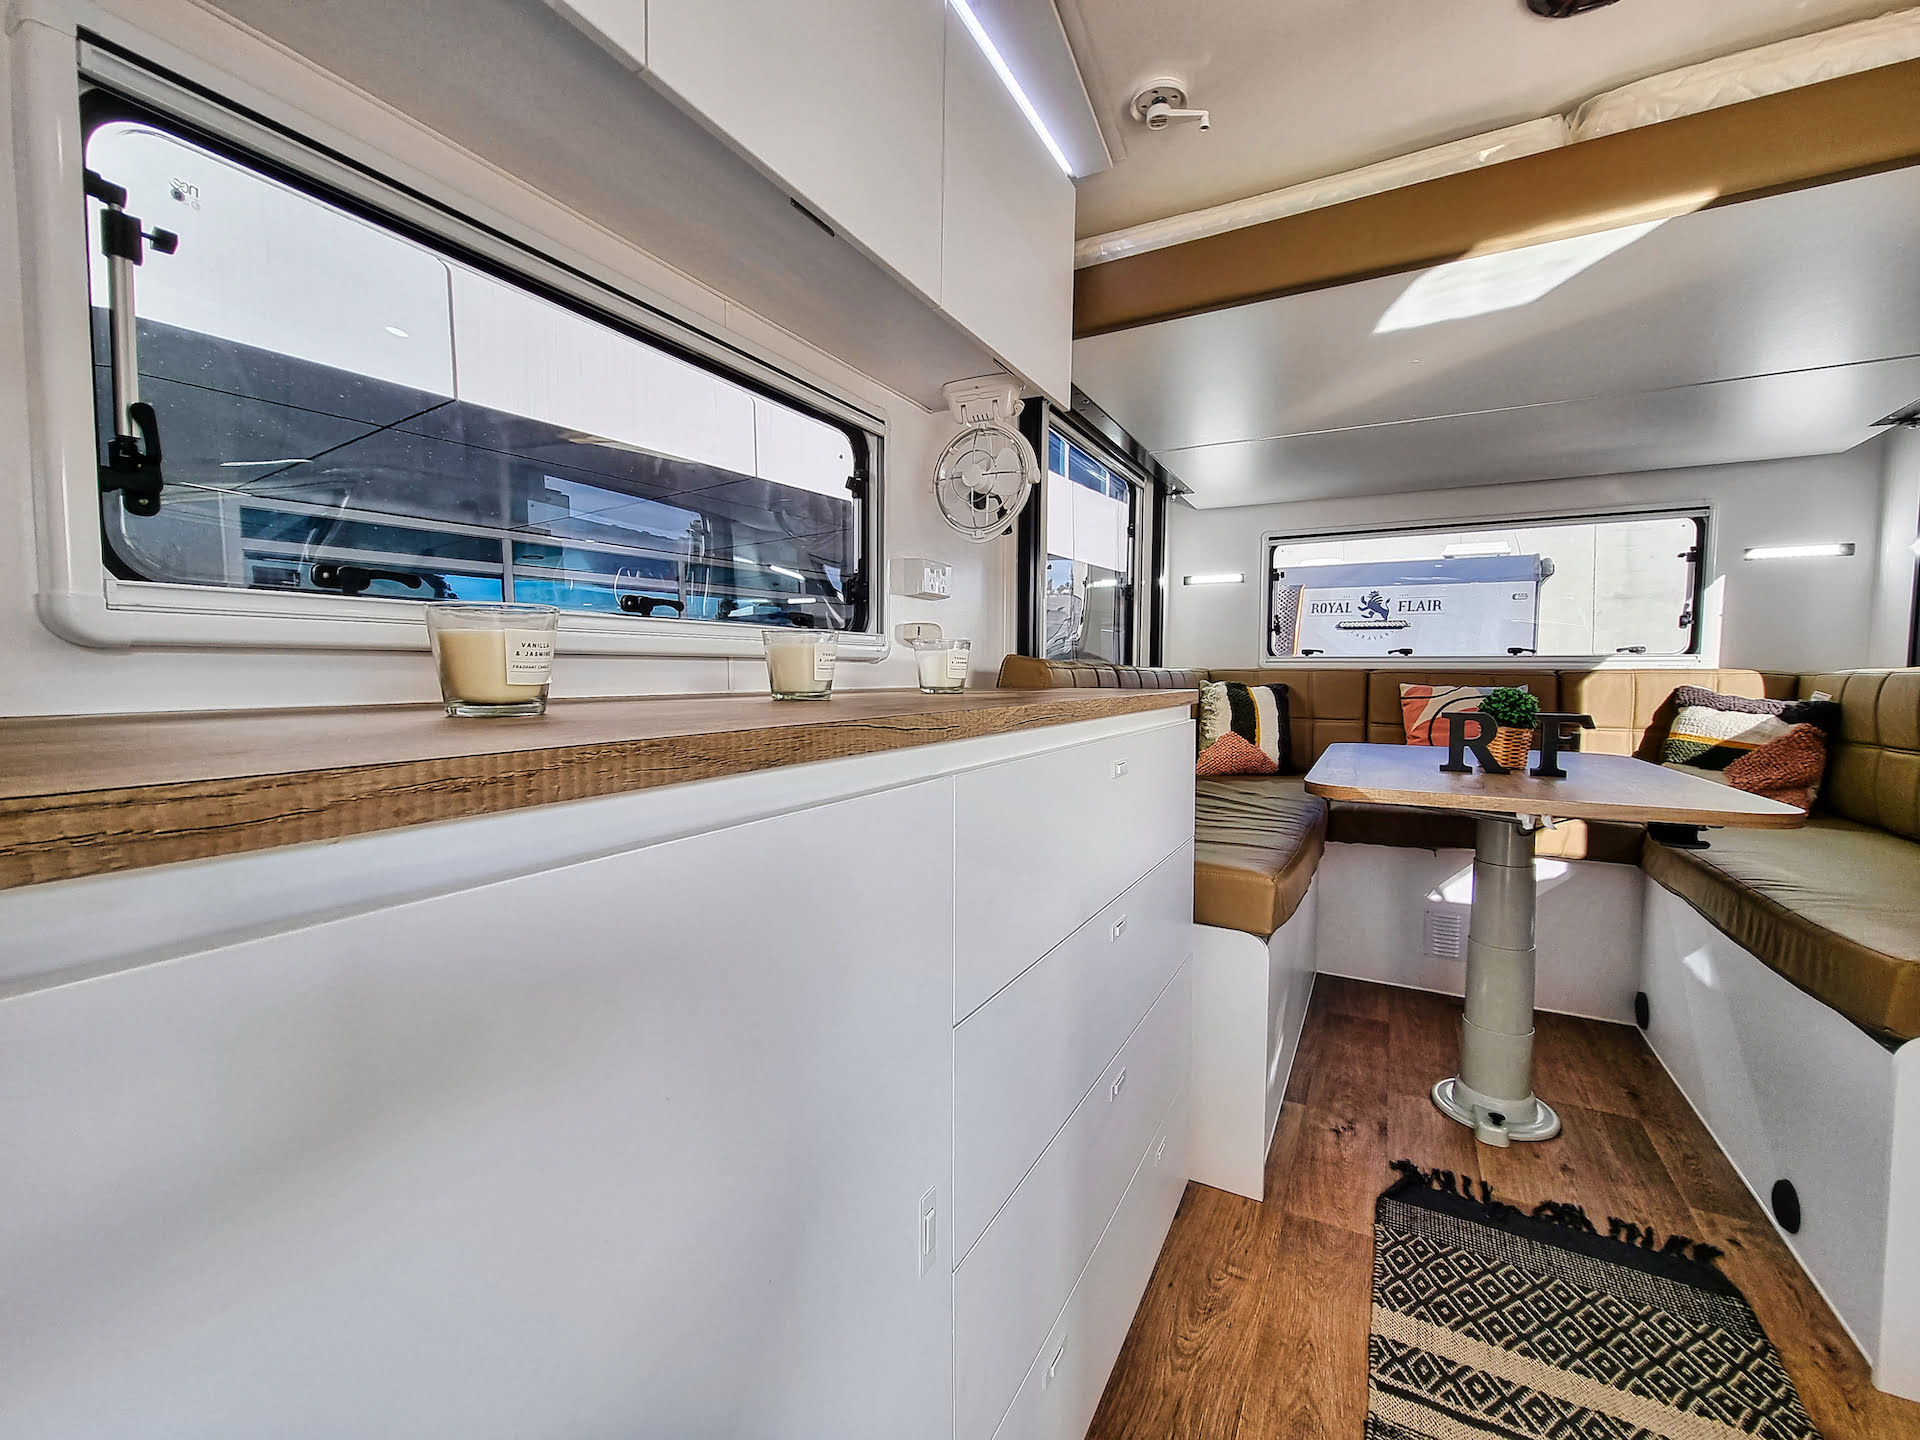 The Aussiemate caravan's interior features a versatile dropdown bed, merging luxury with smart build